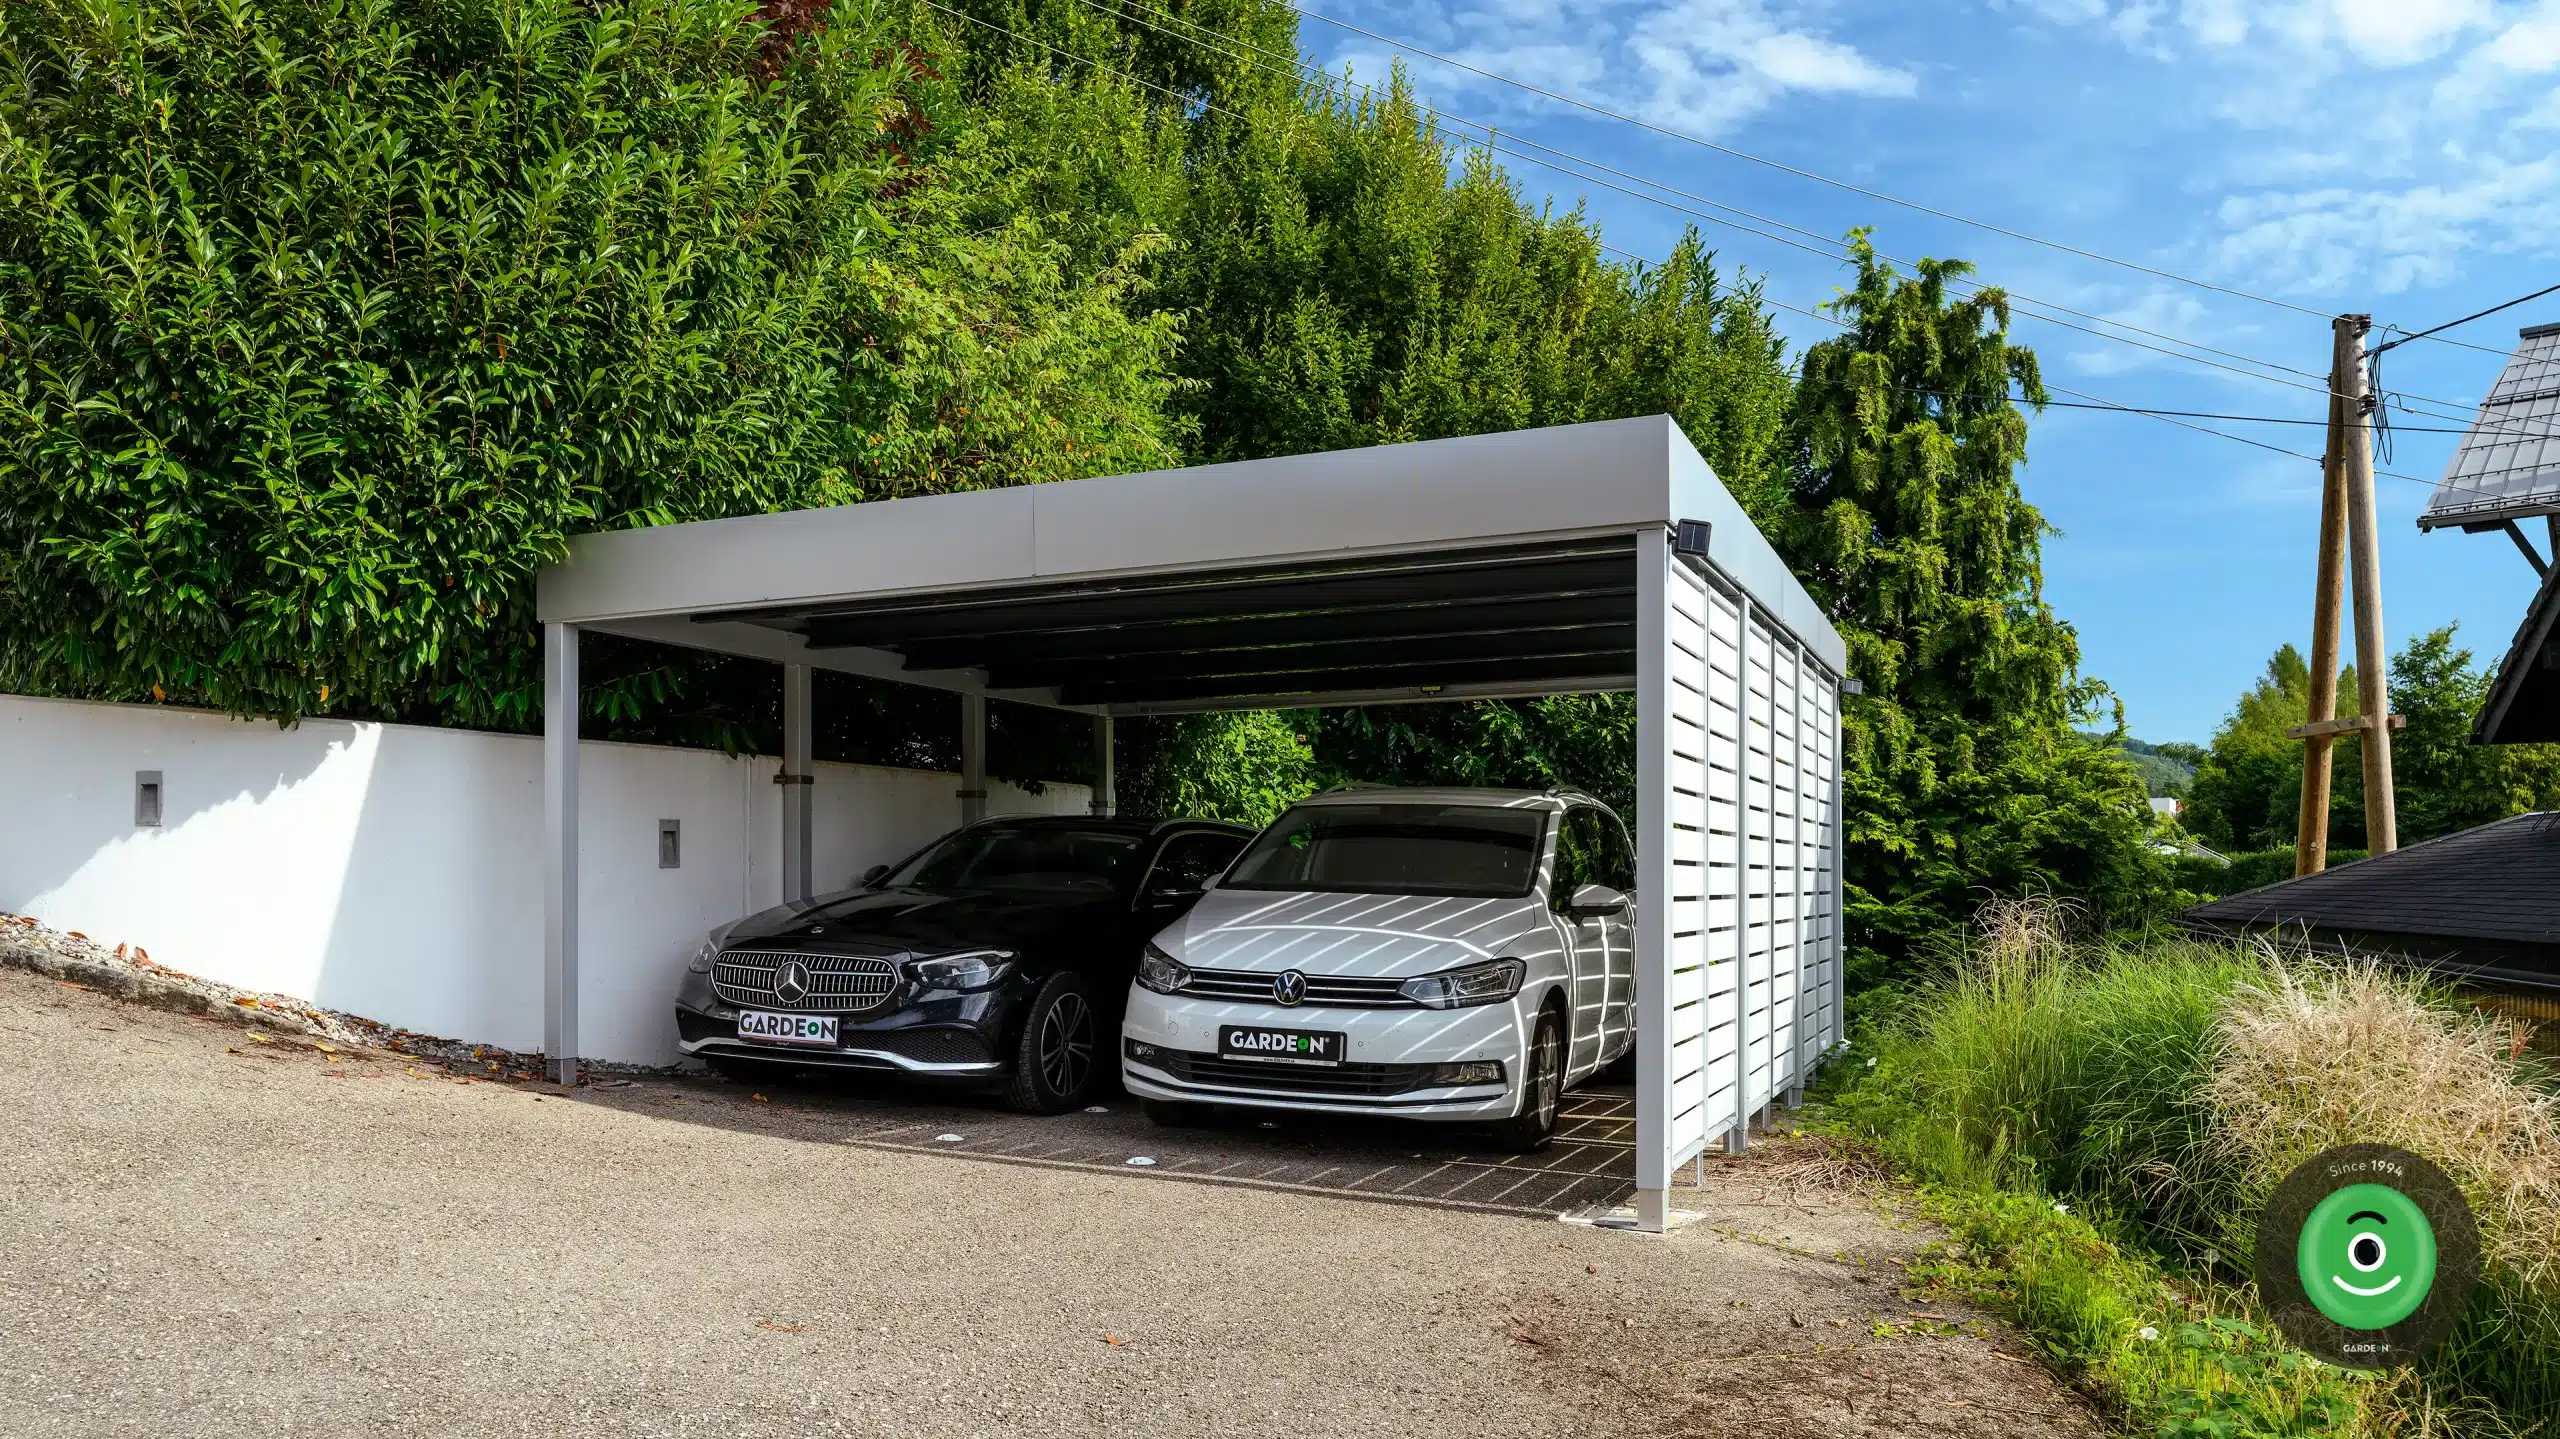 Doppelcarport: Moderner Carport für 2 Autos